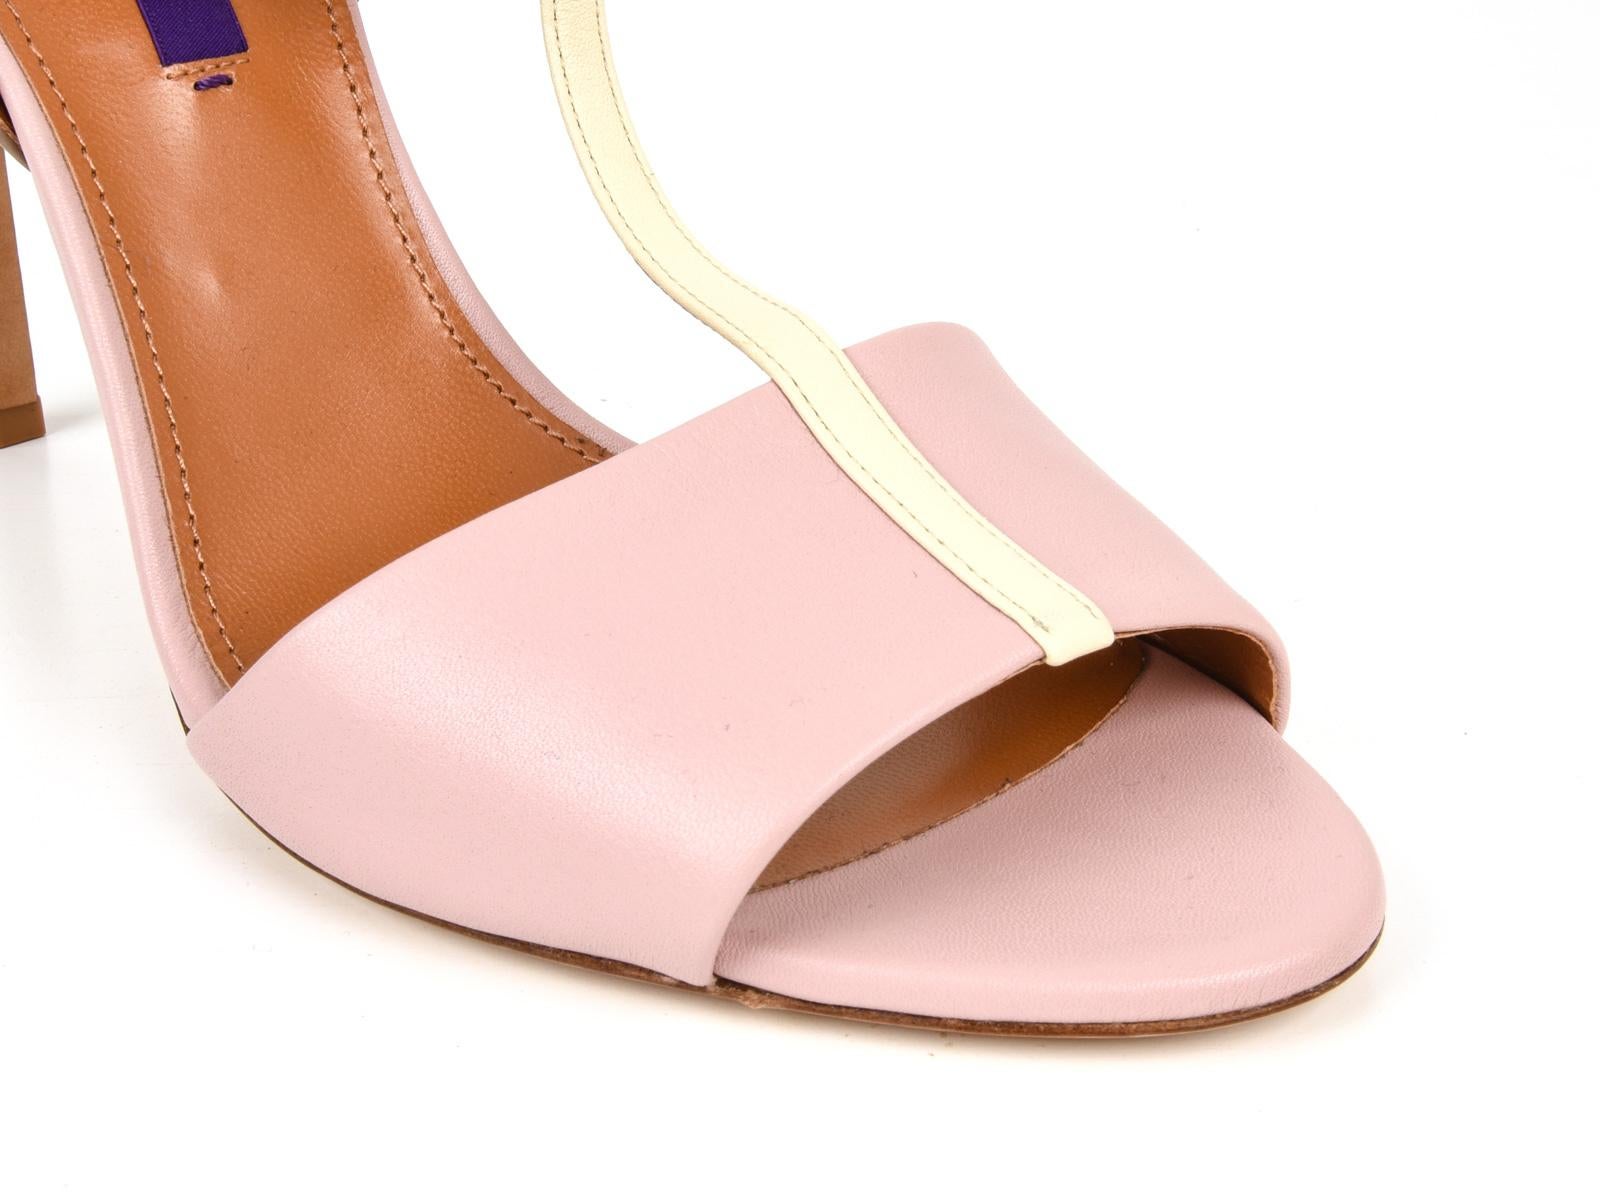 Beige Ralph Lauren Shoe Tri Color High Heel T Strap Sandal Ankle Detail 39.5 / 9.5 